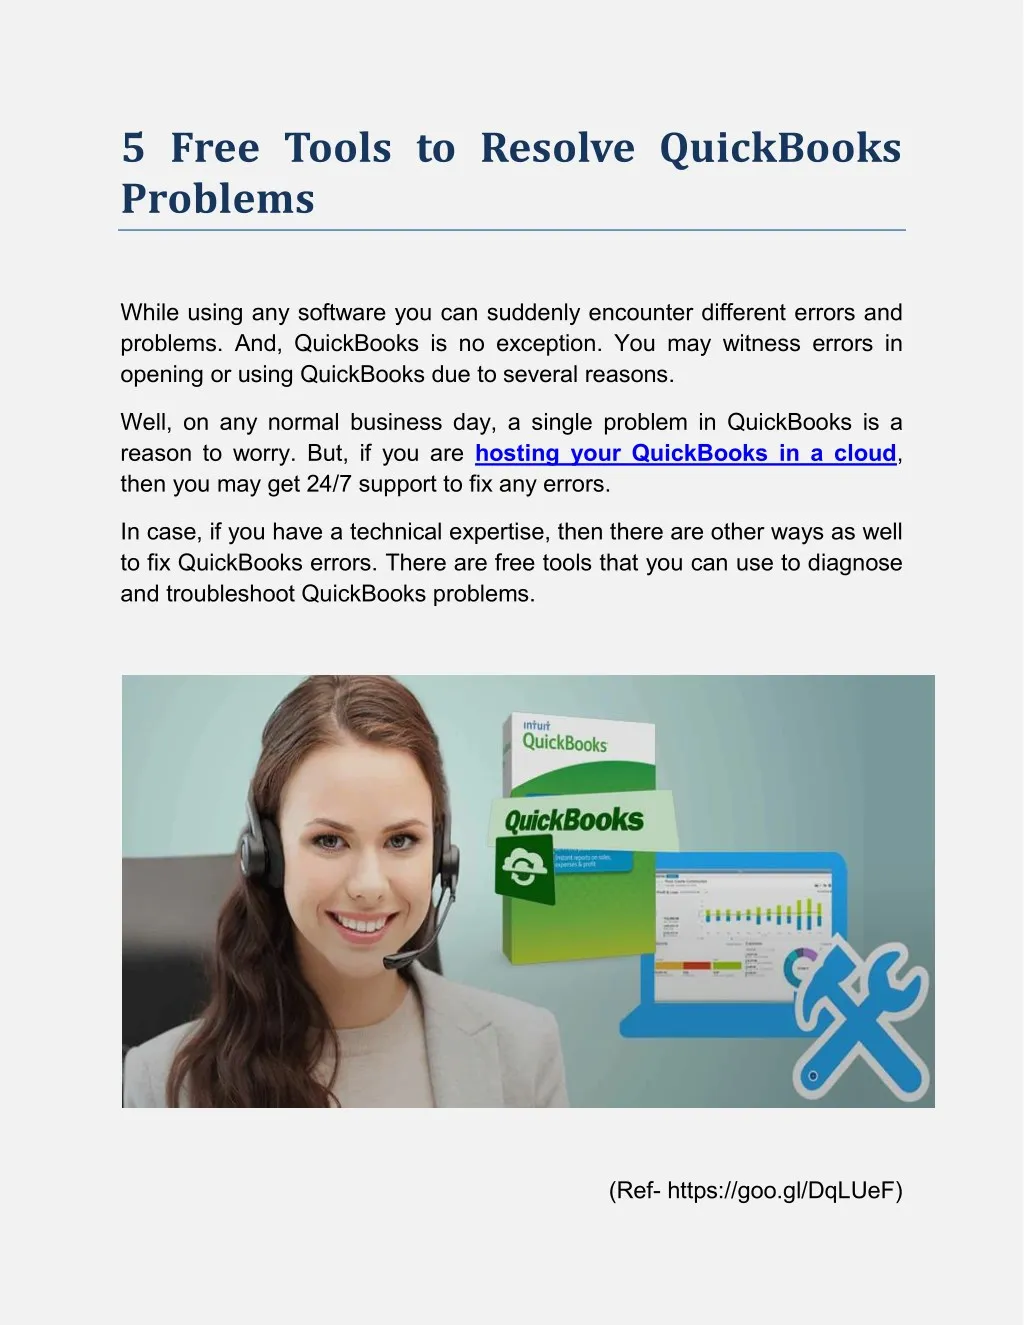 5 free tools to resolve quickbooks problems